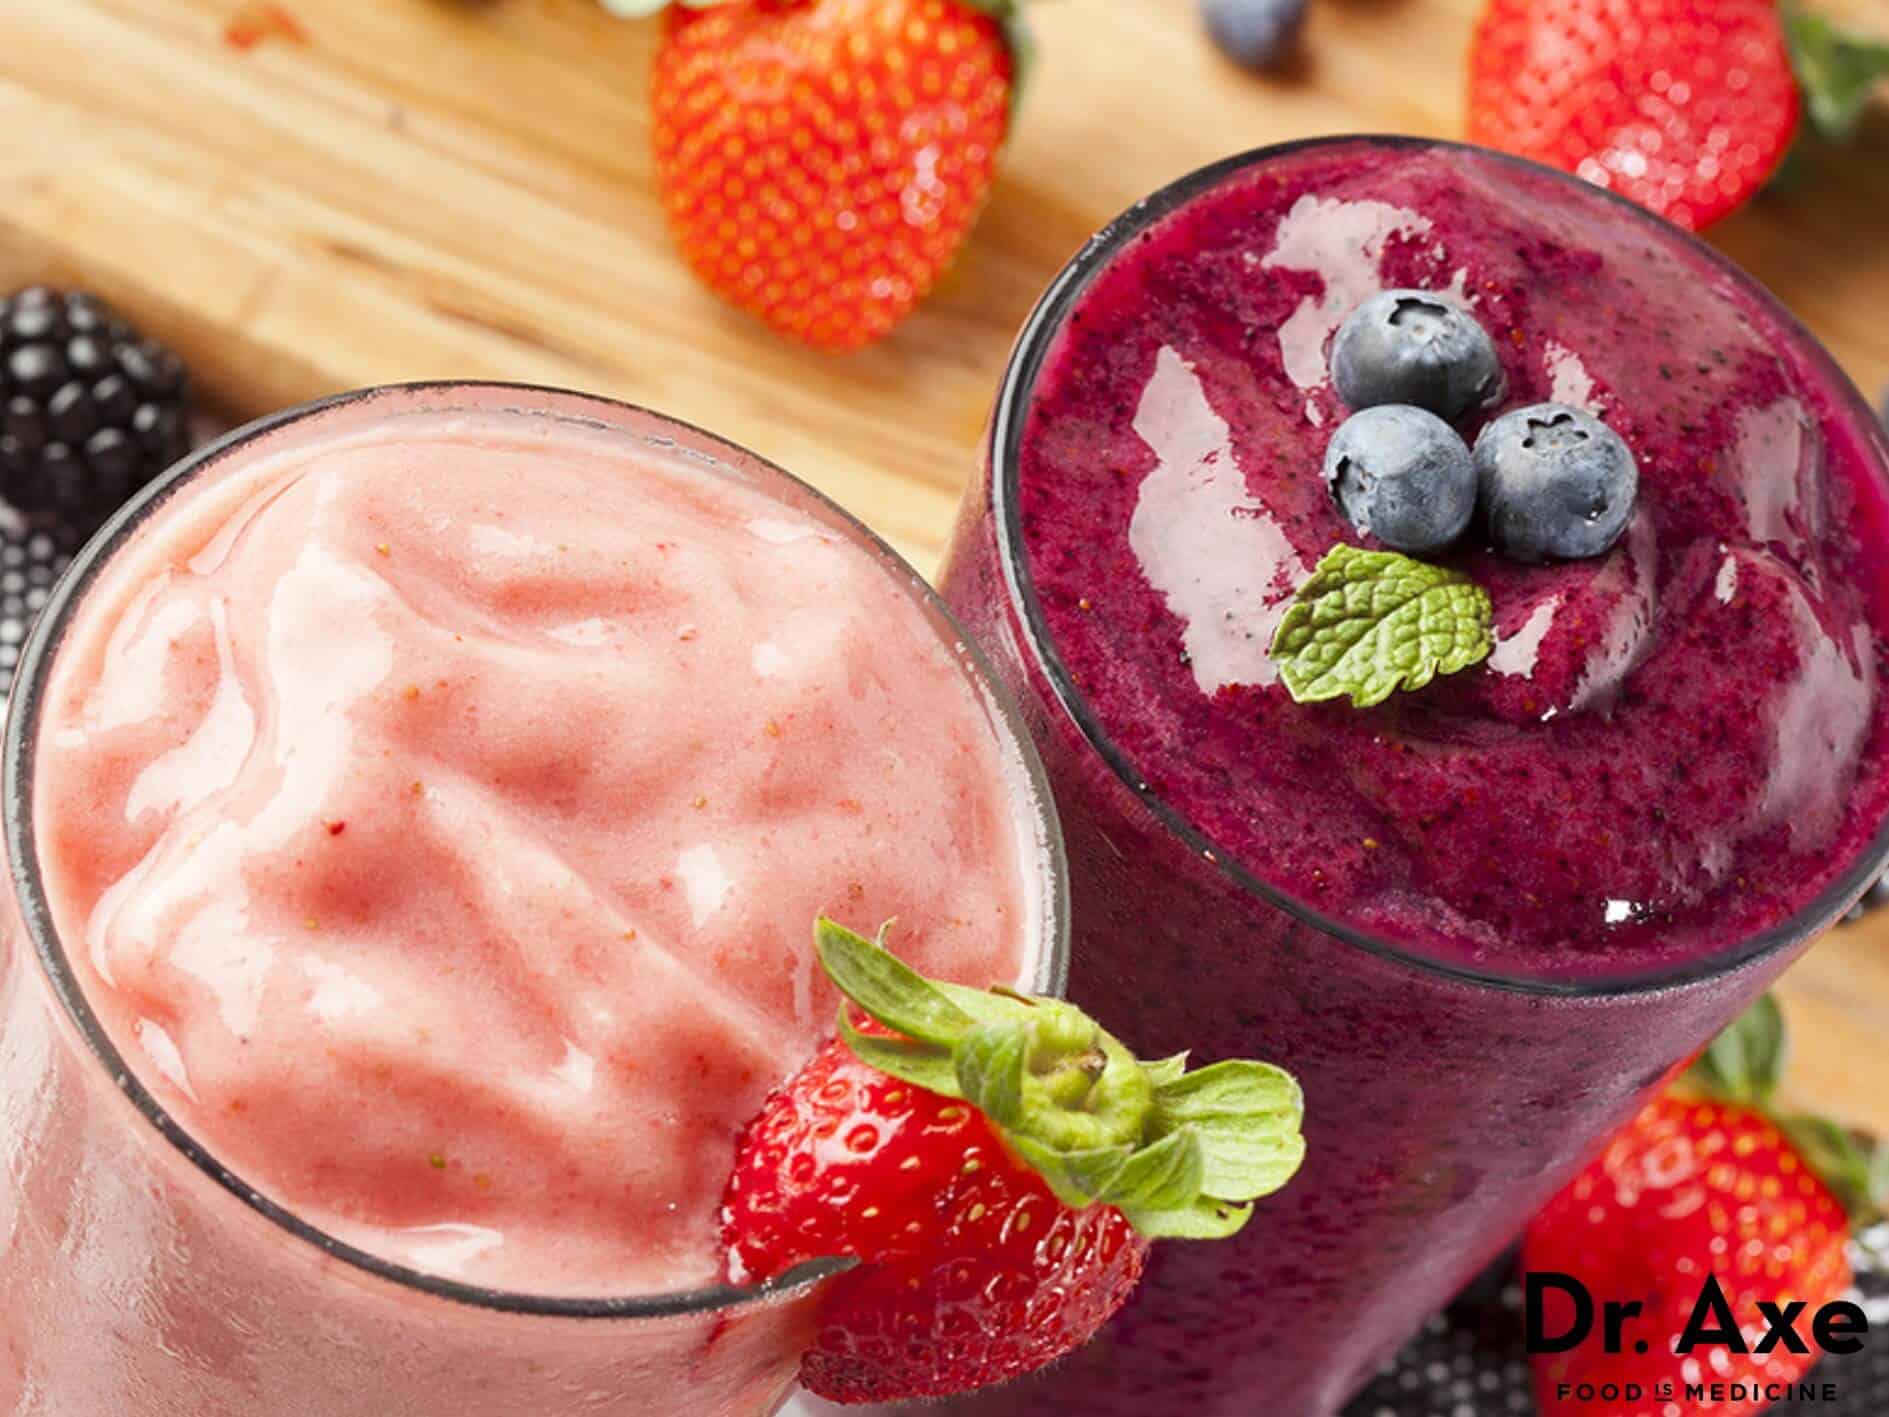 Berry smoothie recipe - Dr. Axe